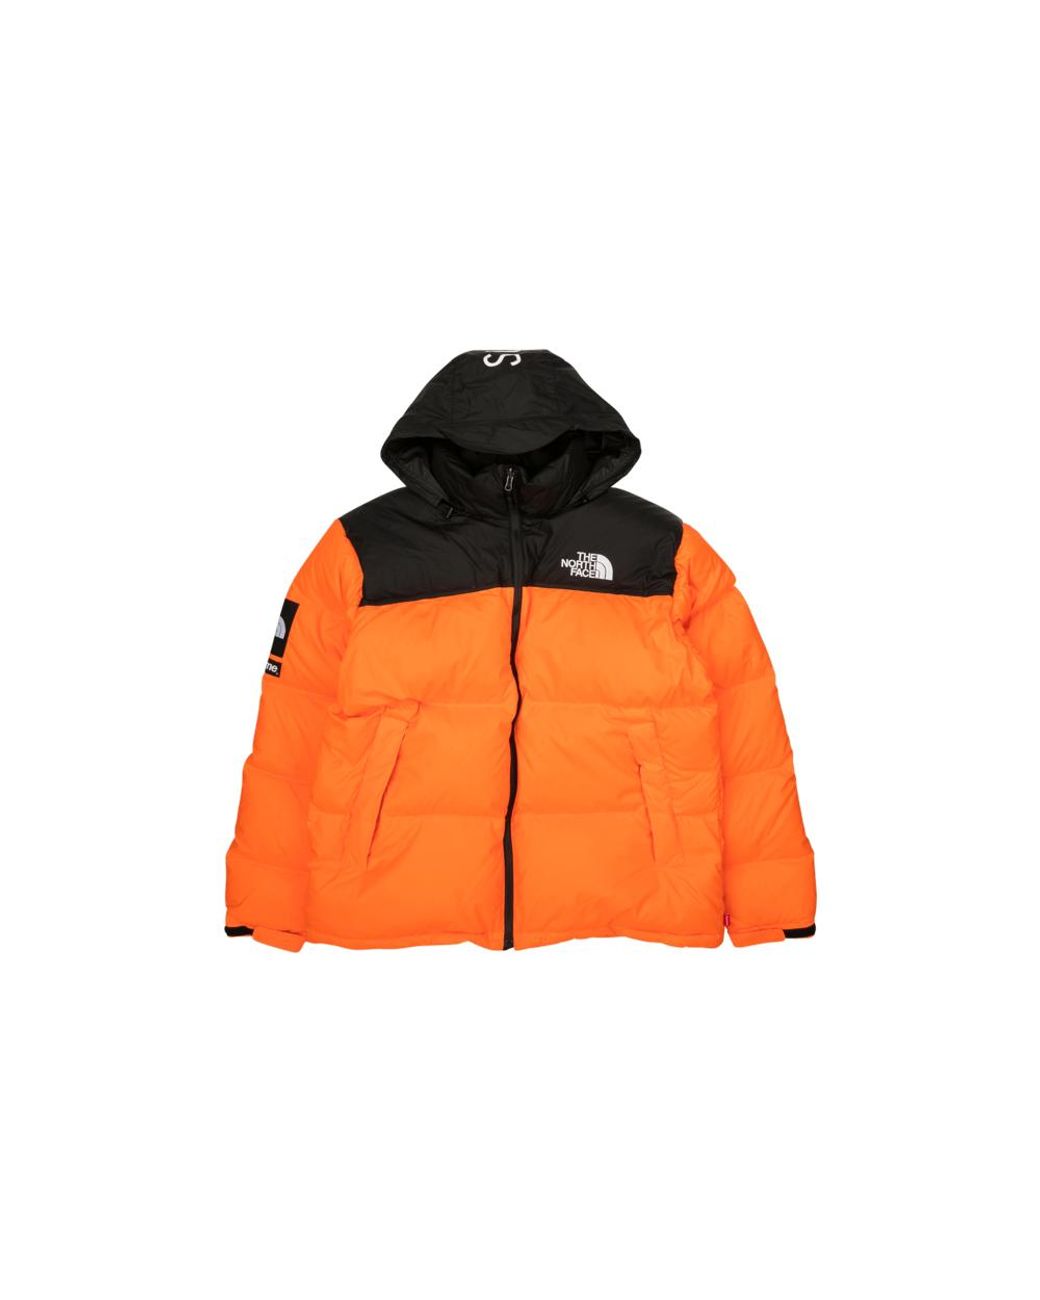 supreme x north face orange jacket